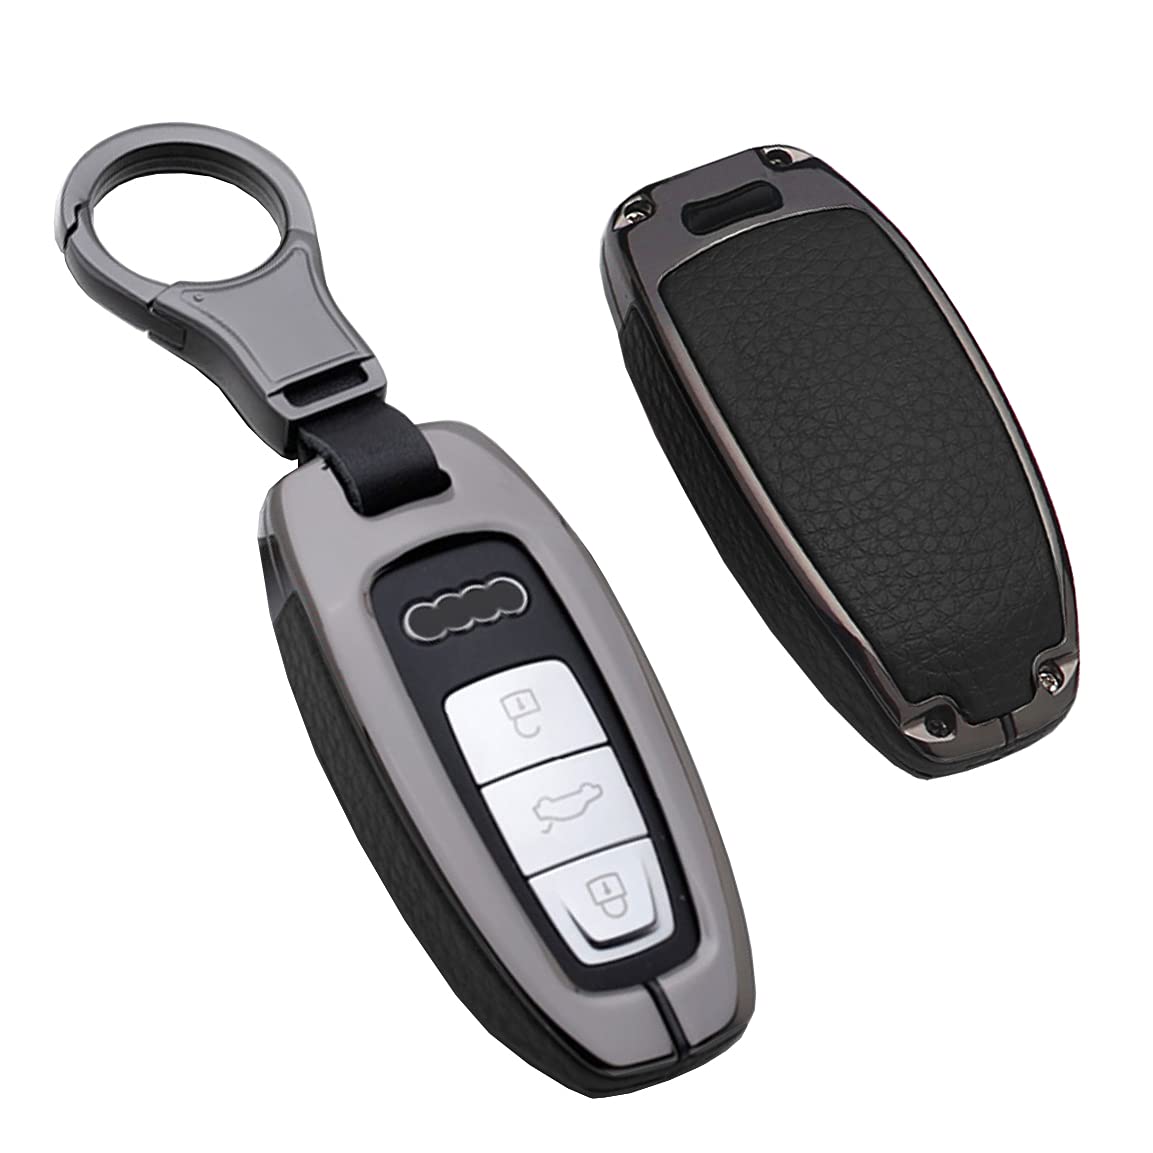 HIBEYO Autoschlüssel Hülle passt für Audi A6 A7 A8 Q7 Q8 E-Tron 3-Tasten Autoschlüssel Keyless Schutzhülle Schlüsselhülle Geeignet Cover Leder Schlüsselbox Smart Schlüssel Autozubehör-Schwarz von HIBEYO